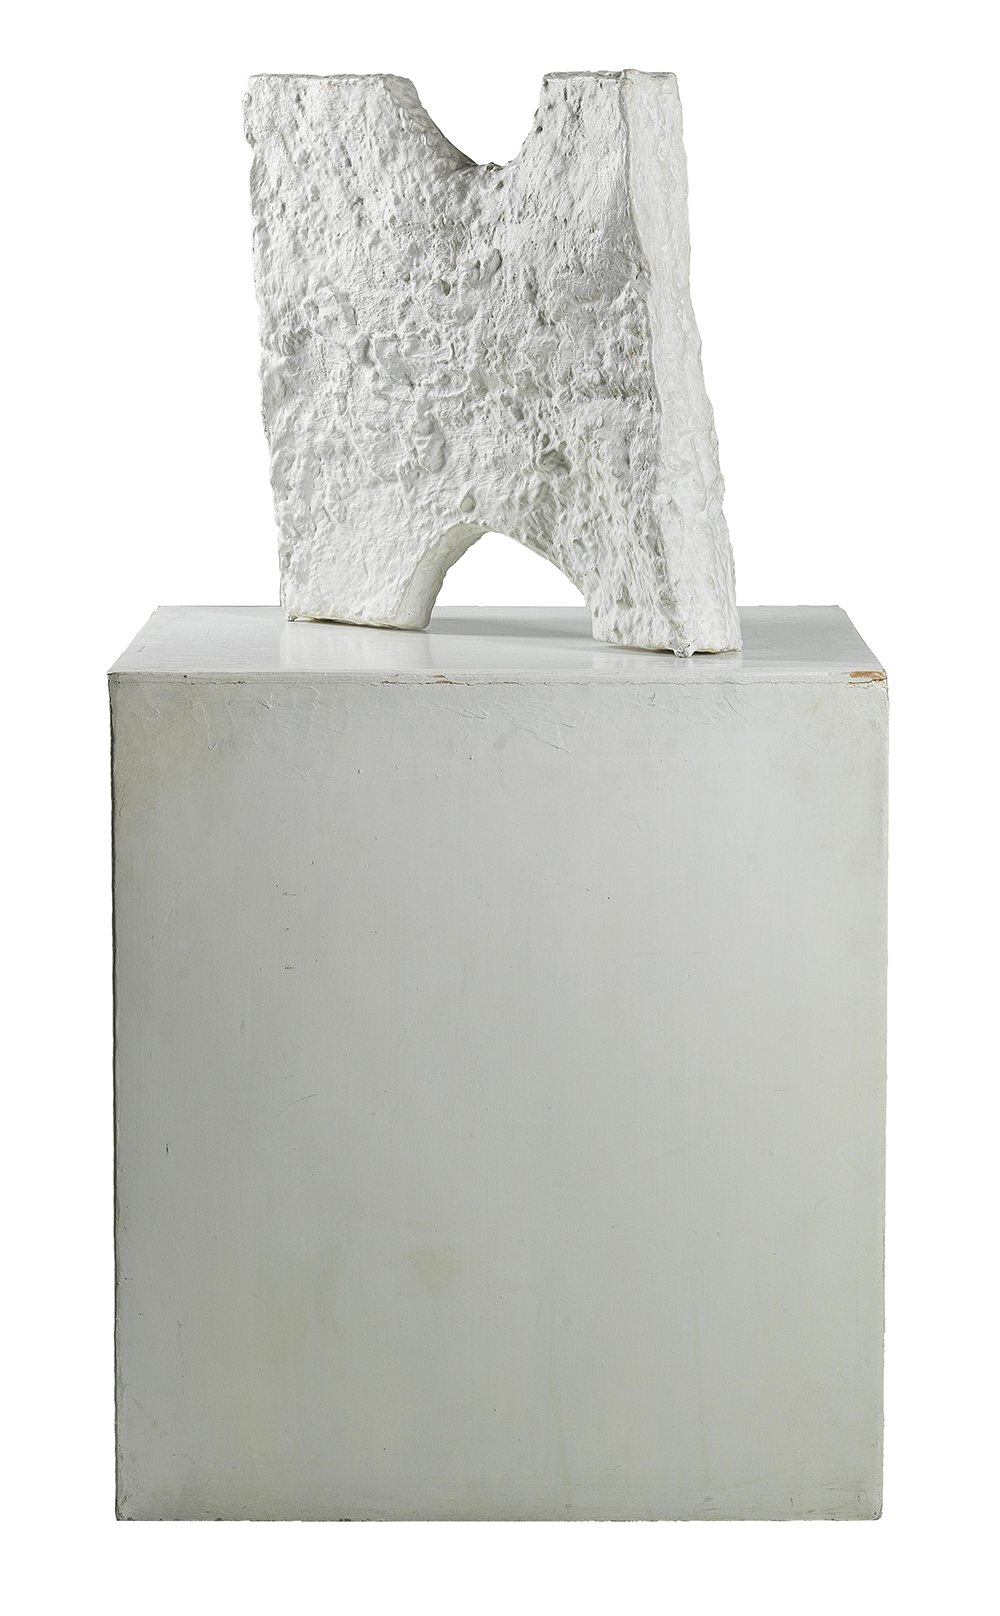 Franz West (1947-2012), BI 4 (Paßstück), 1990, betitelt mit Schablone (?) BI 4 (Biennale Paßstück 4 of 11 exhibited), bemalter Aluminiumguss, 49 x 50 x 10 cm, Sockel 69 x 60 x 63 cm, Schätzwert € 70.000 – 100.000